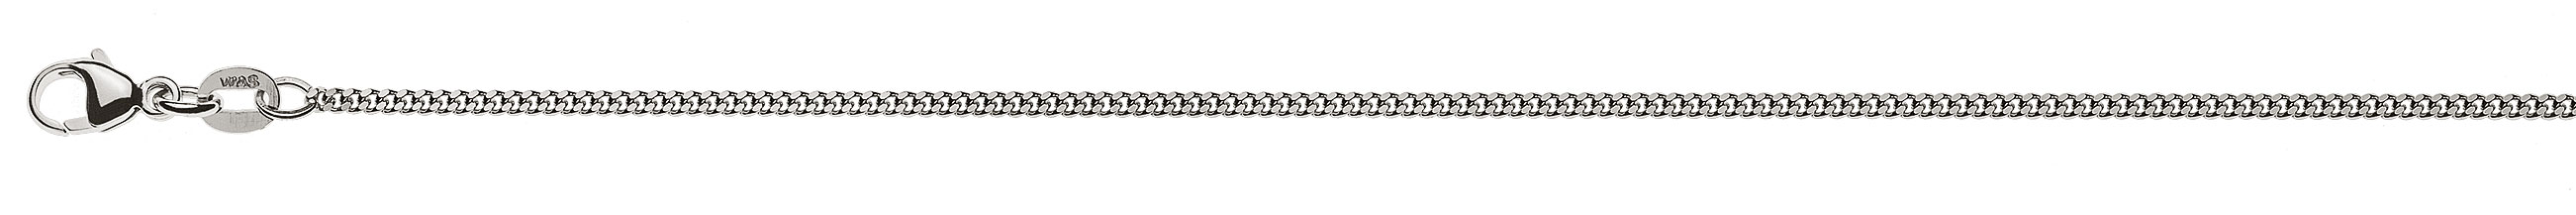 AURONOS Prestige Necklace white gold 18K curb chain polished 50cm 1.6mm